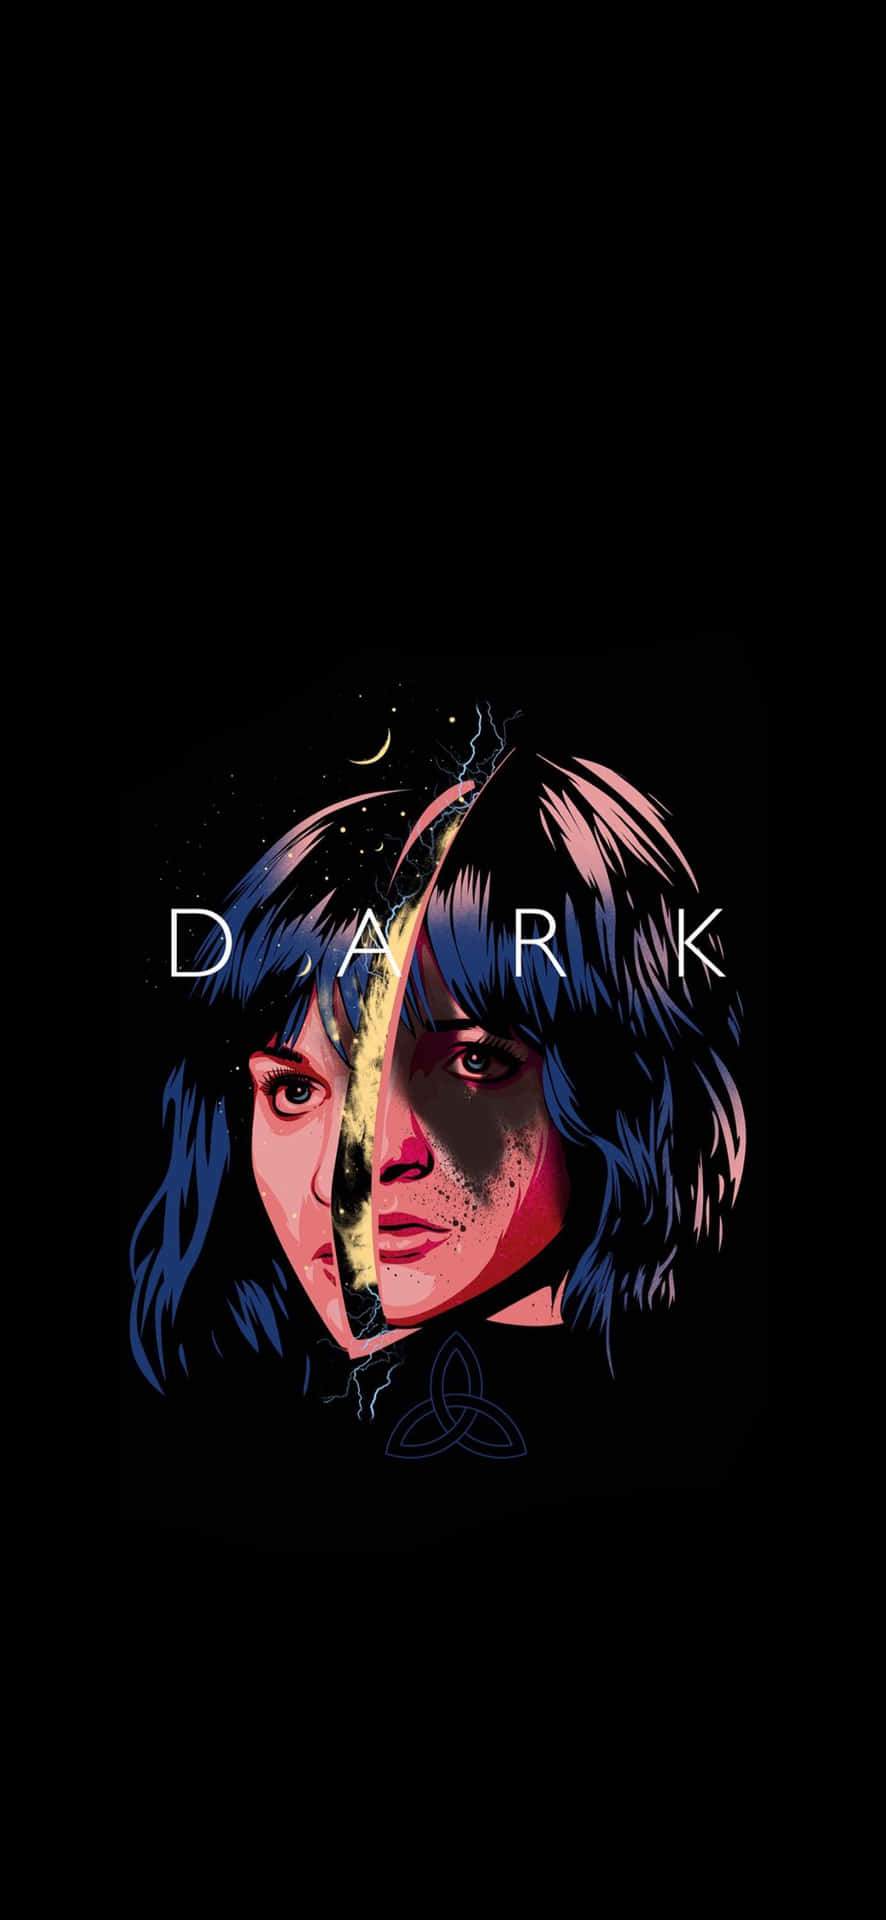 Sliced Image Of Martha From The Dark Netflix Thriller Series Wallpaper